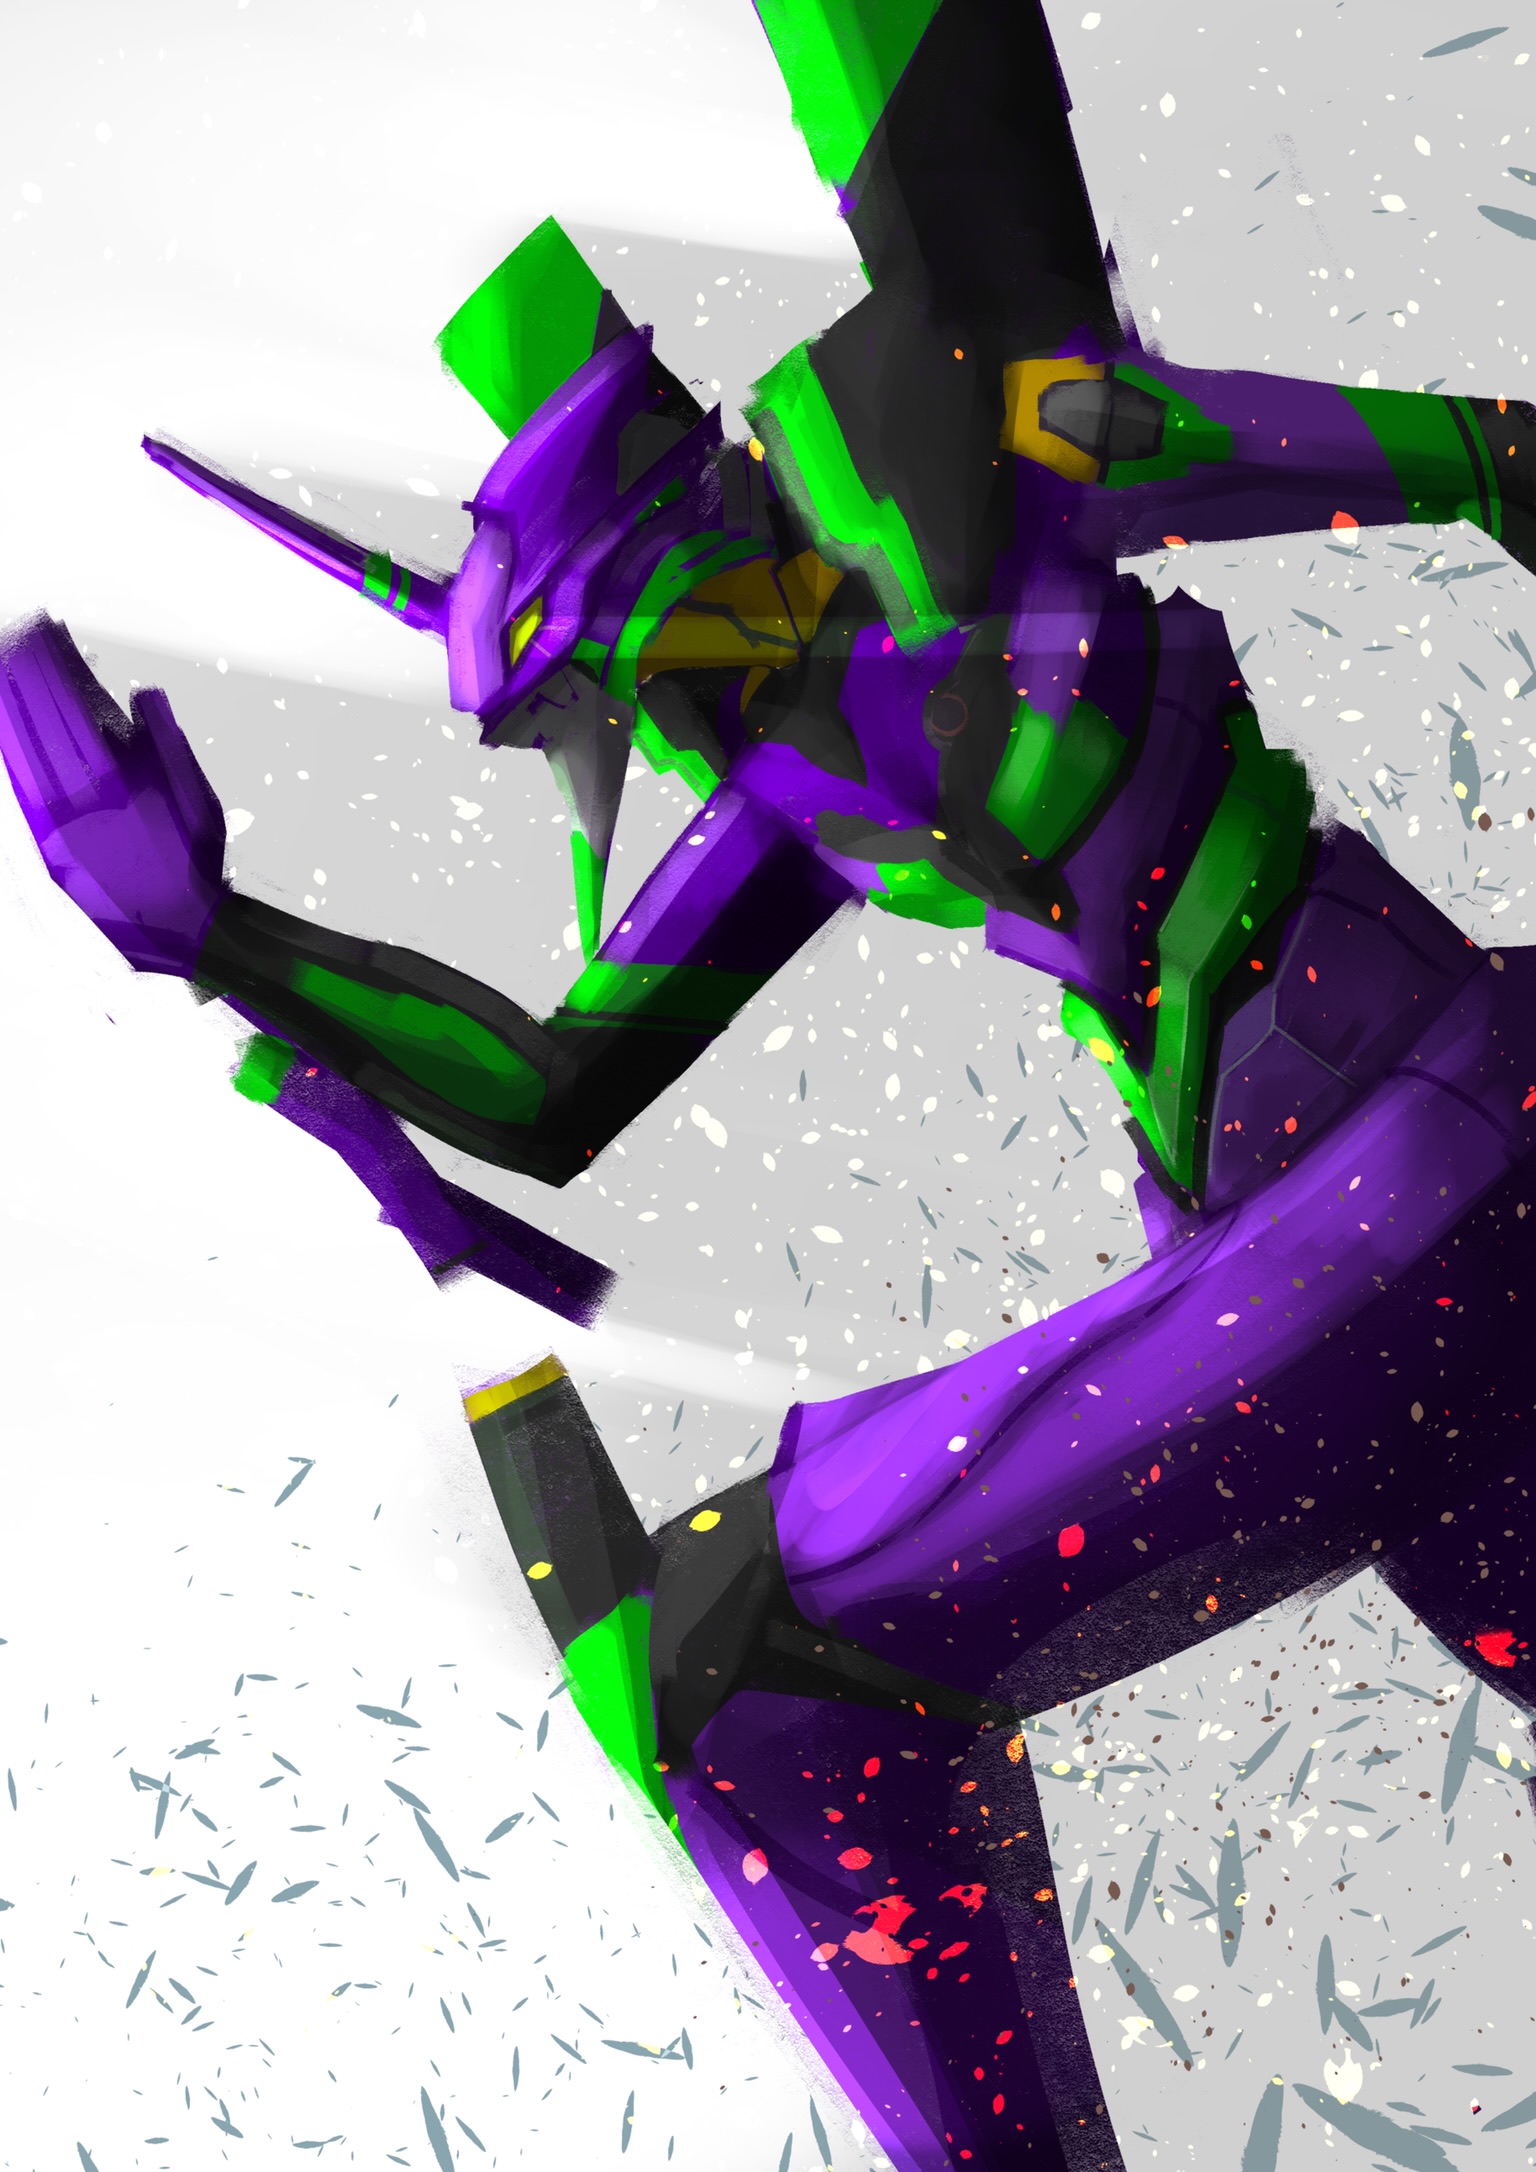 EVA Unit 01 Neon Genesis Evangelion Anime Mechs Super Robot Taisen Artwork Digital Art Fan Art 1536x2172